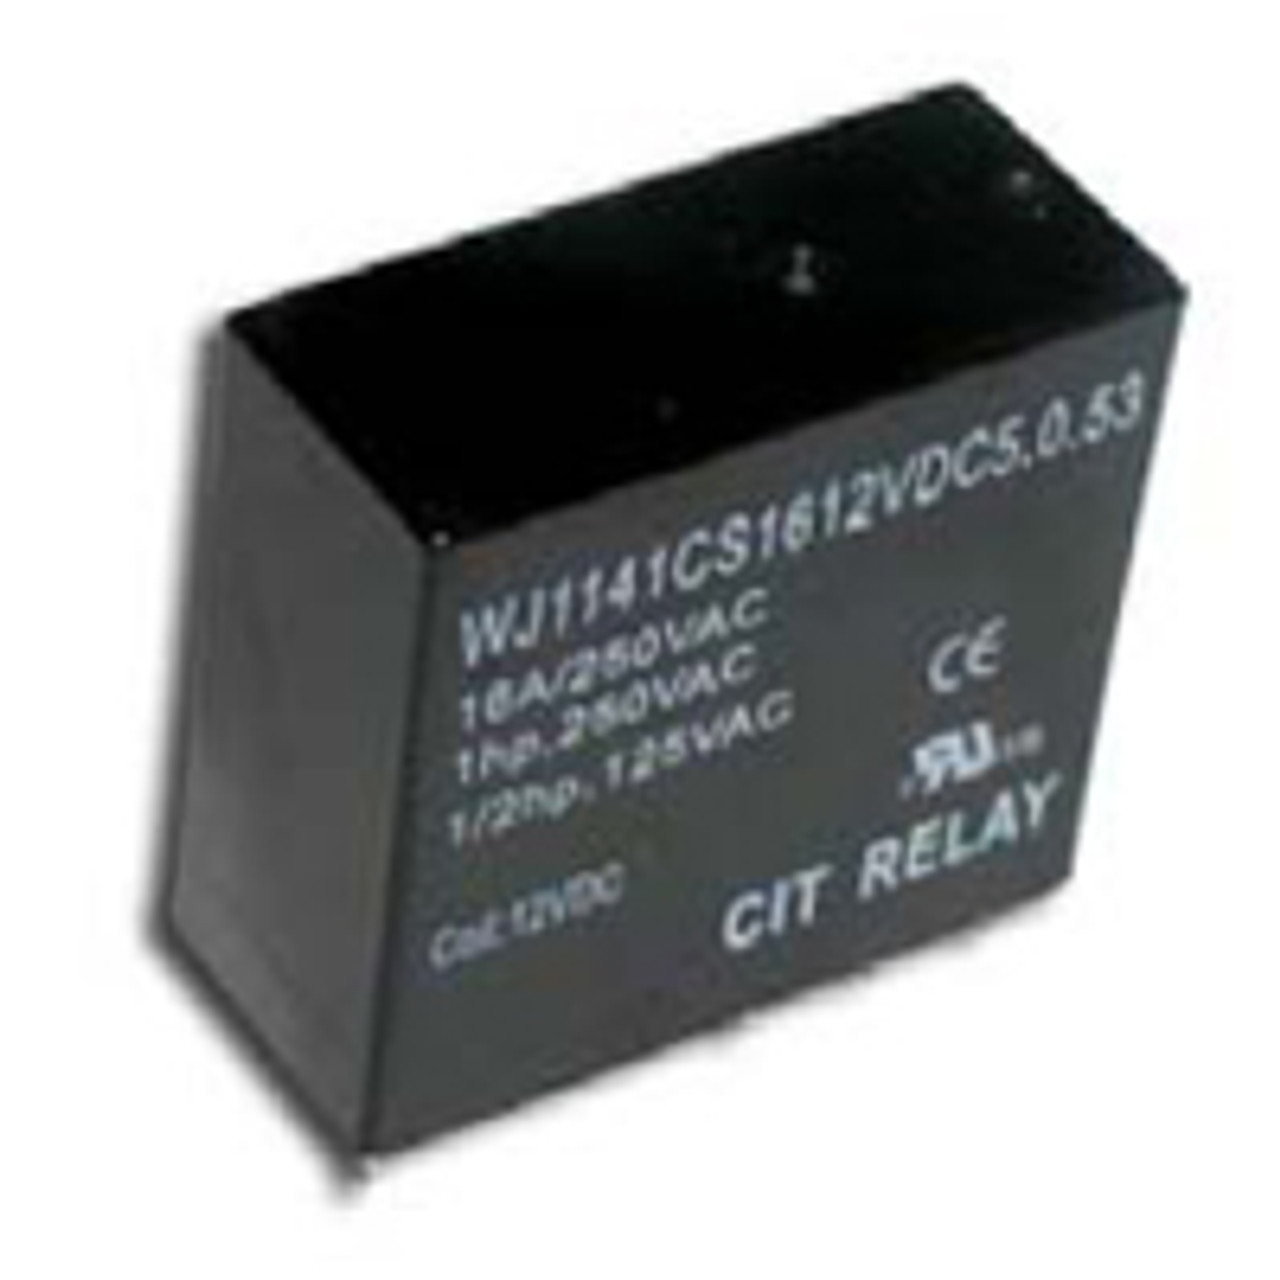 CIT Relay and Switch J1141CS1012VDC3.5.53 Power Relays